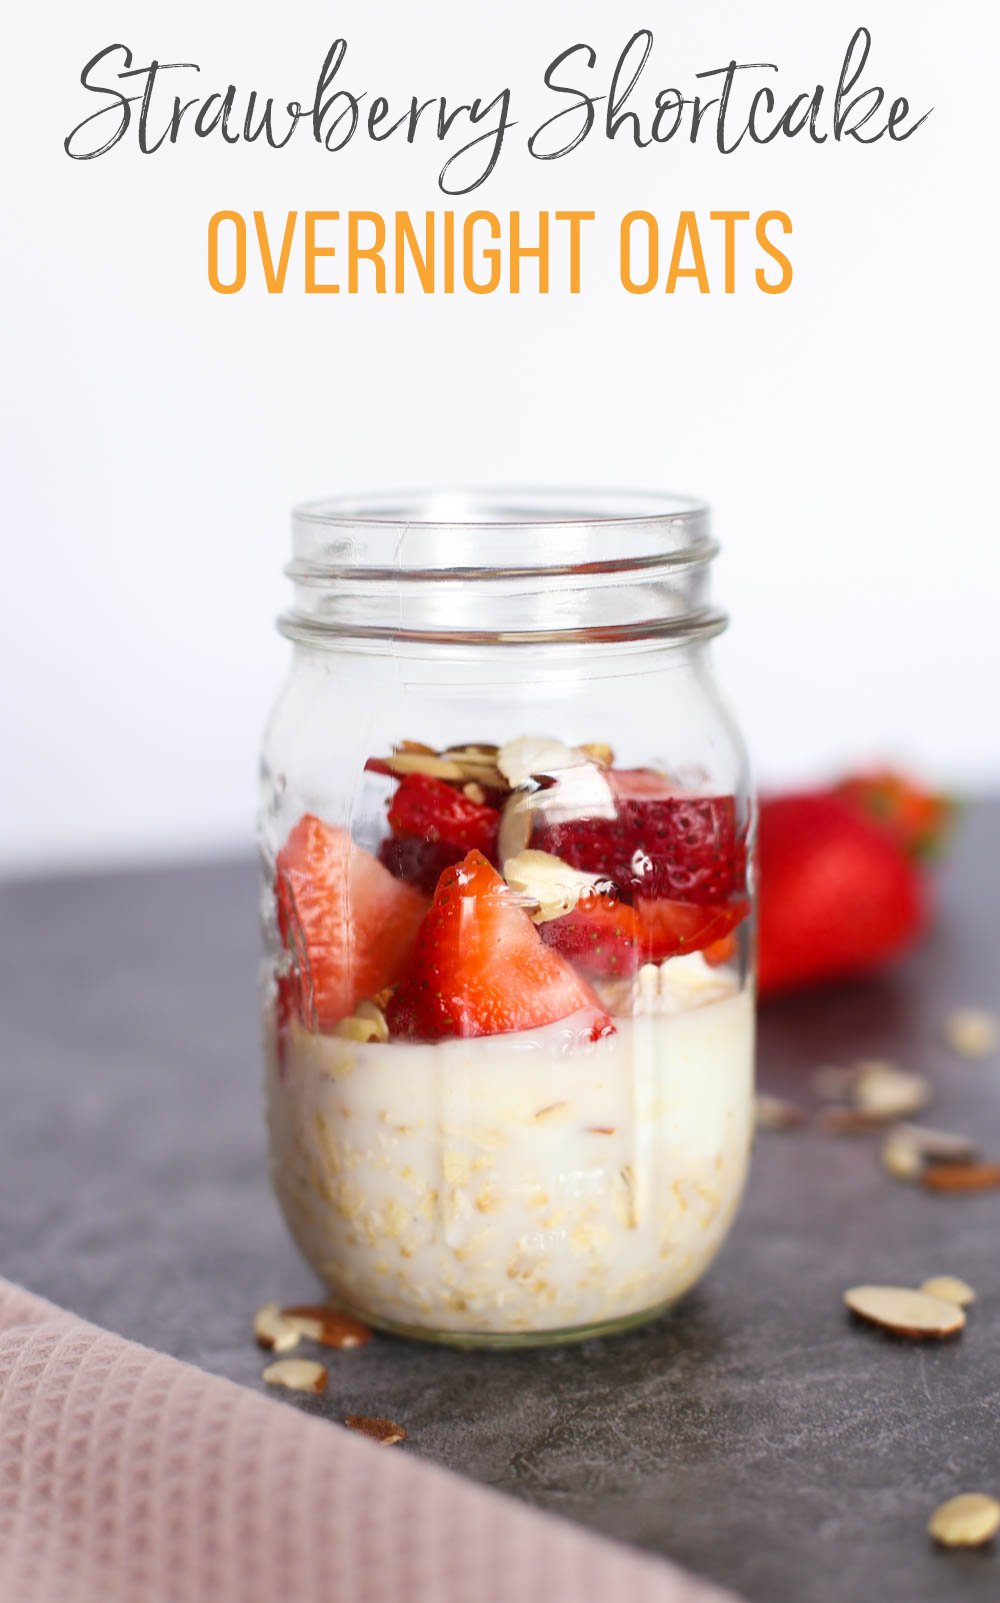 Strawberry shortcake overnight oats ingredients layered in a mason jar.